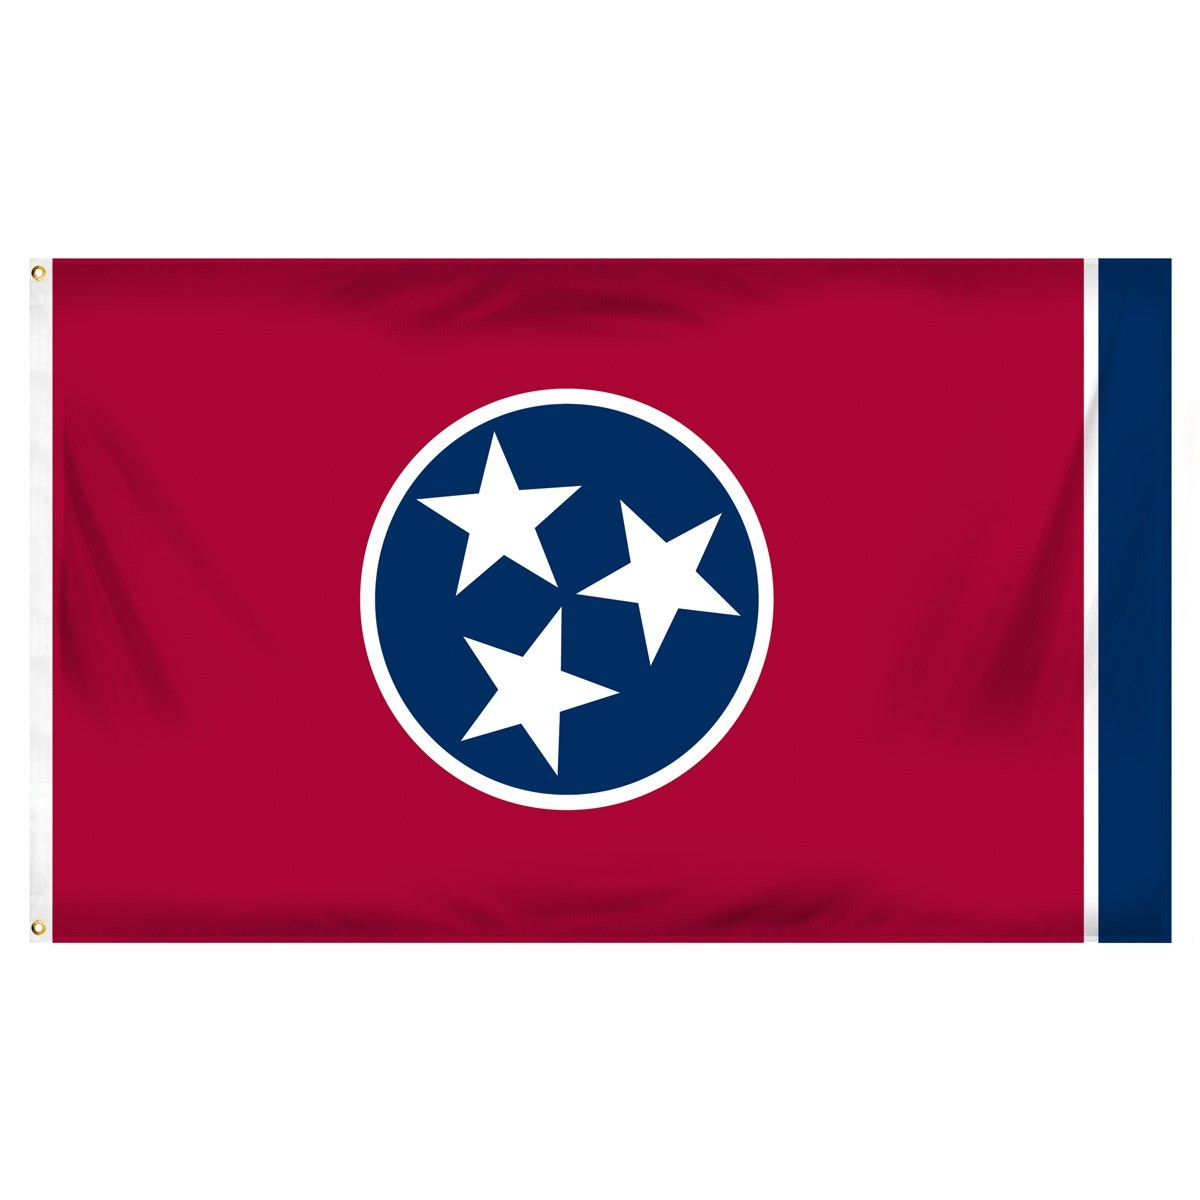 Bandera de poliéster interior de Tennessee de 3 pies x 5 pies